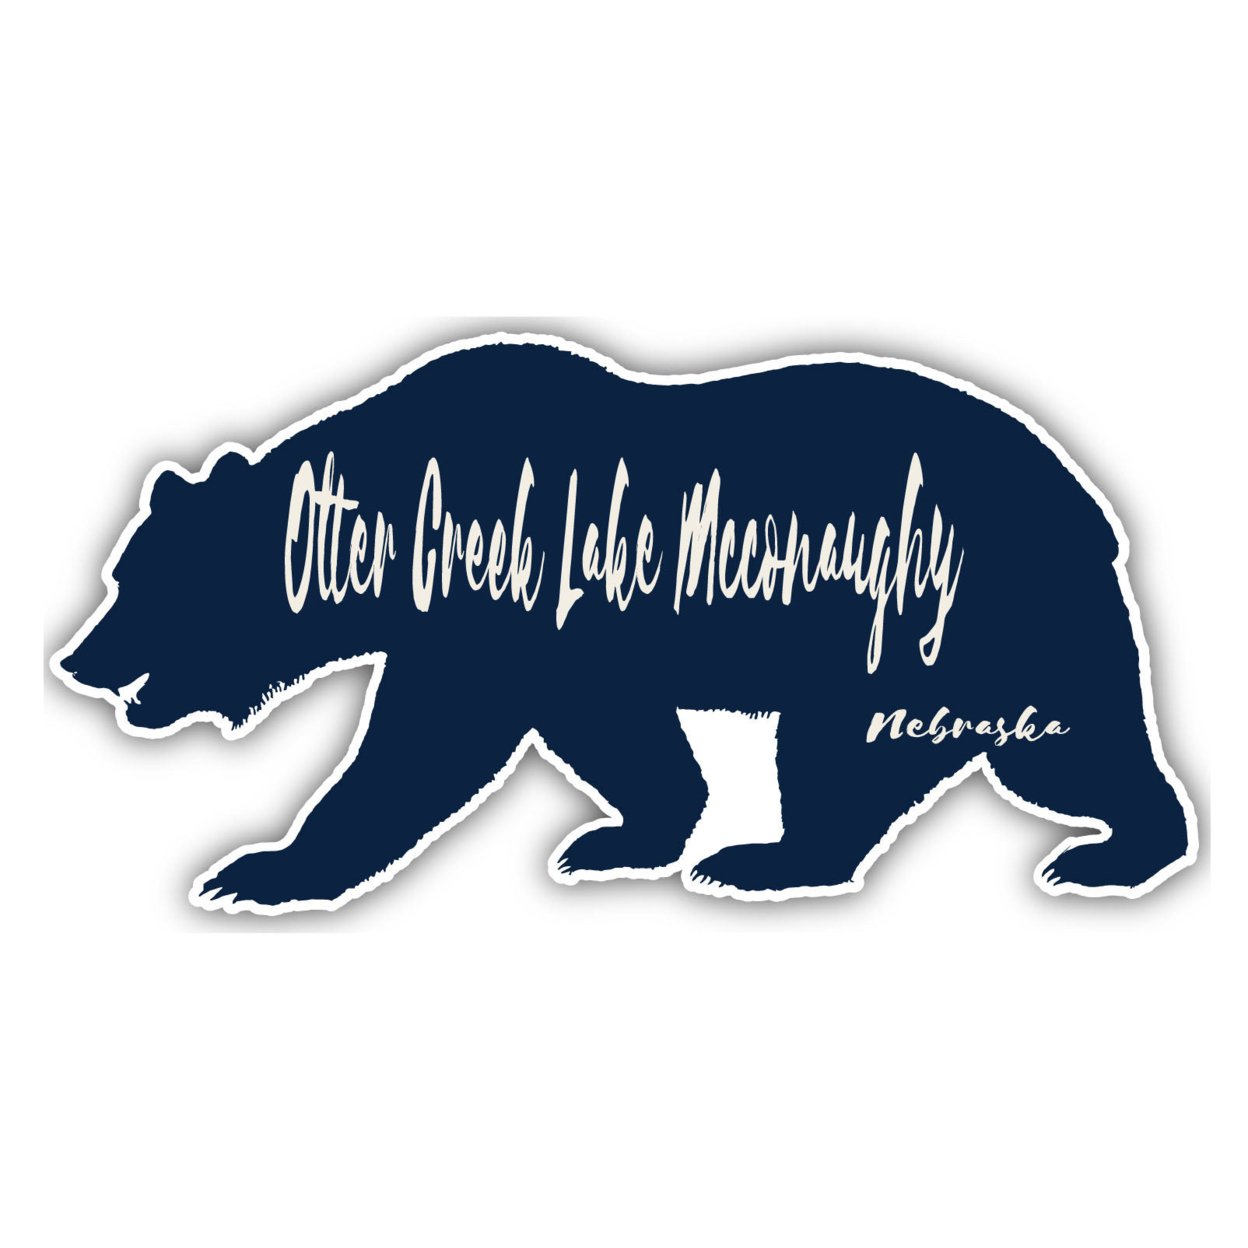 Otter Creek Lake Mcconaughy Nebraska Souvenir Decorative Stickers (Choose Theme And Size) - Single Unit, 2-Inch, Bear